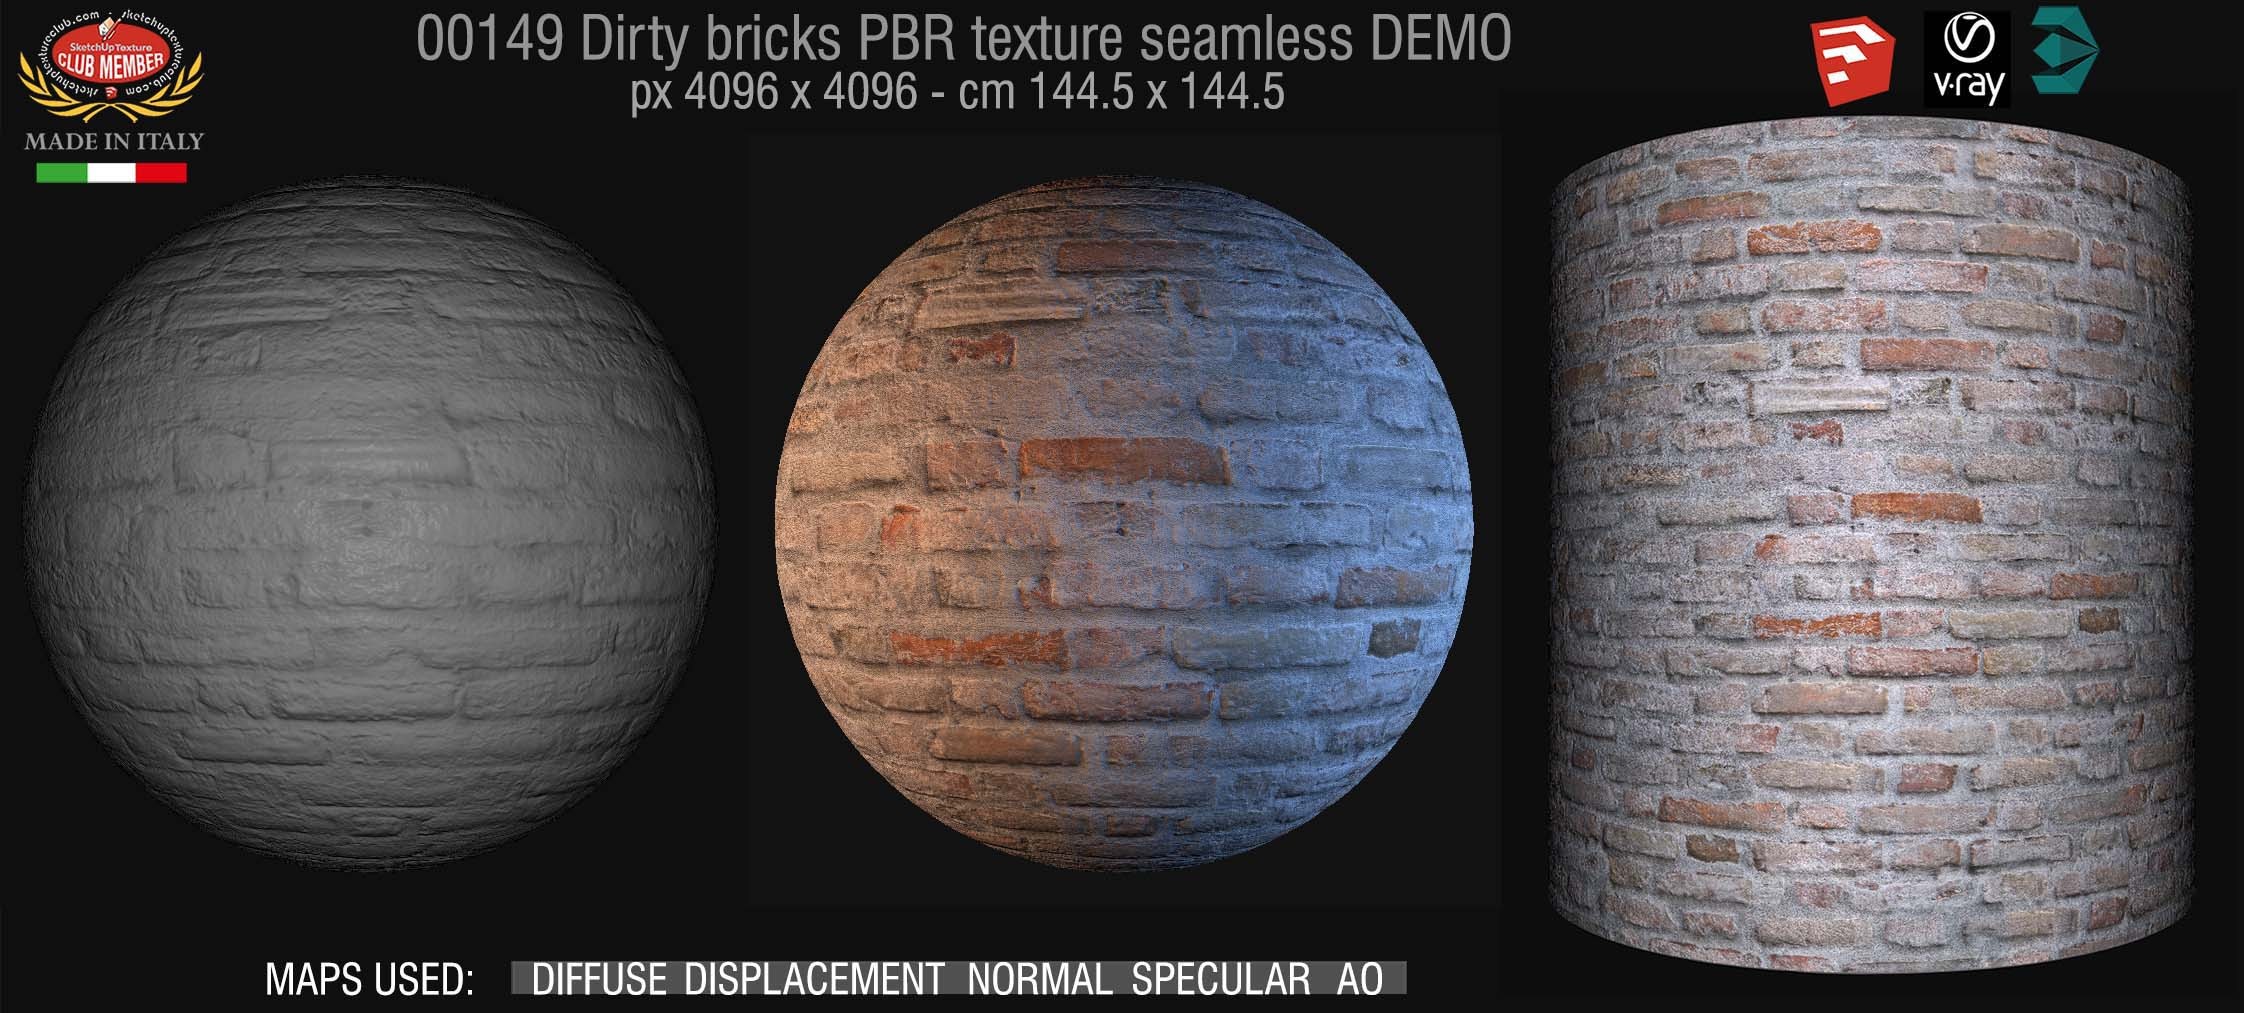 00149 Dirty bricks PBR texture seamless DEMO